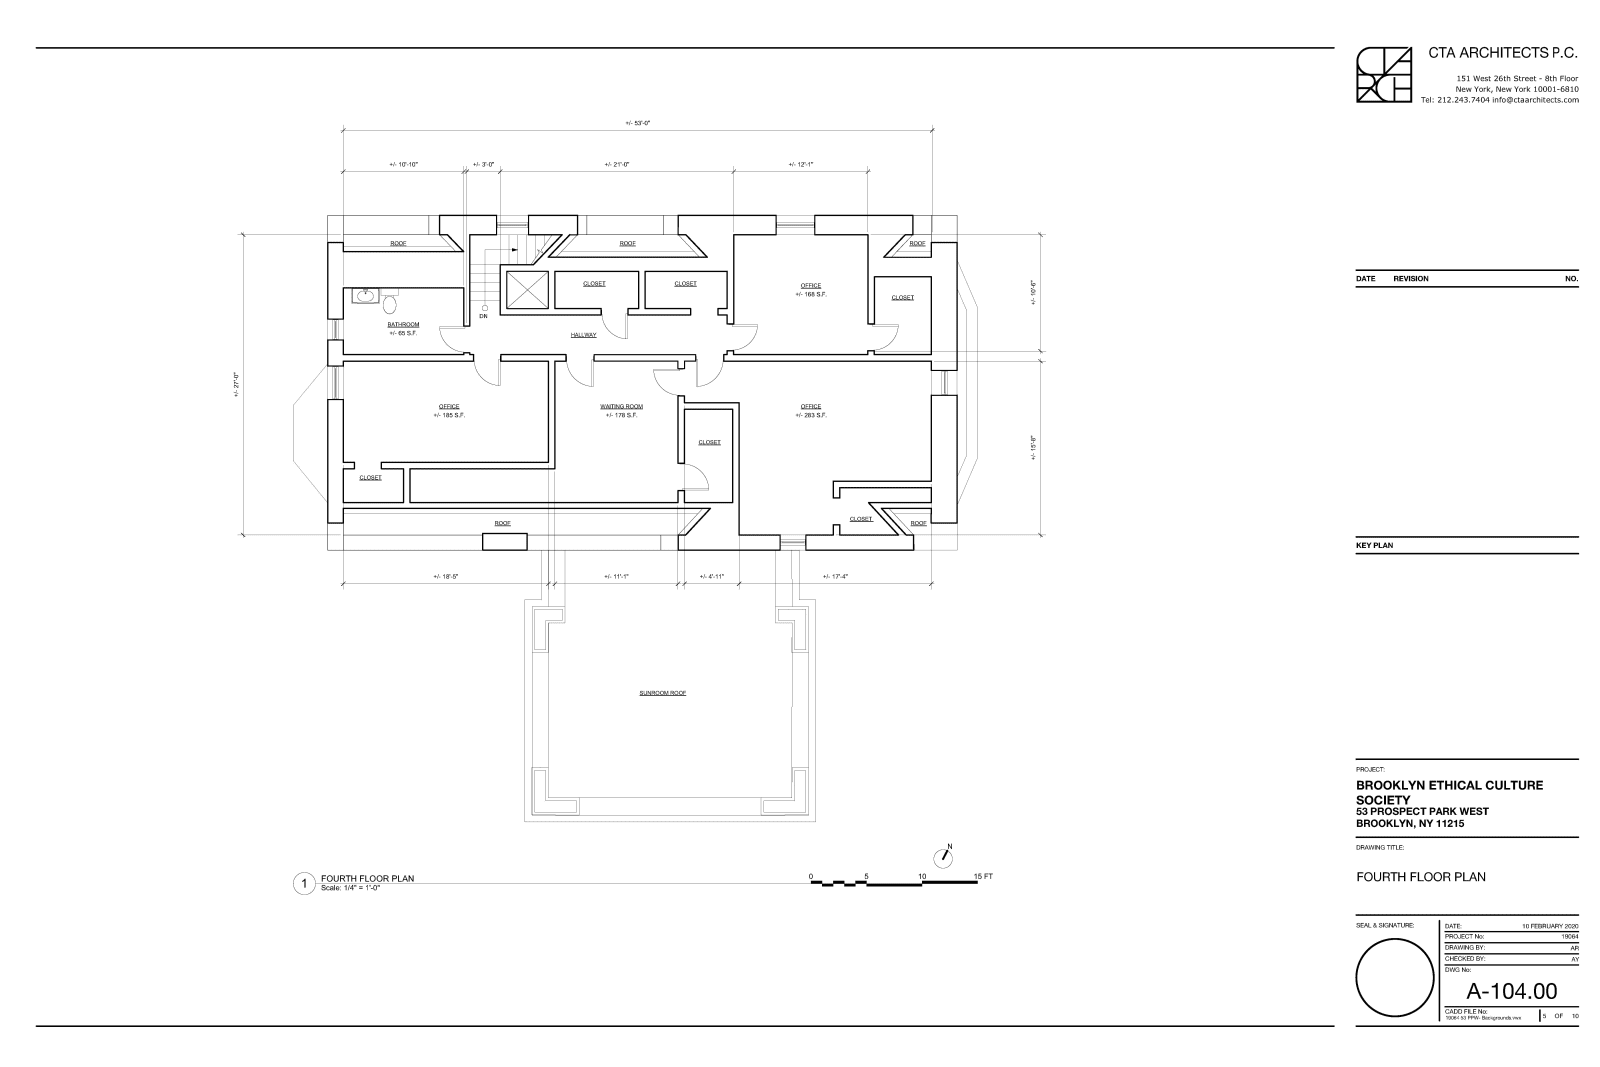 floorplan for 53 prospect park west brooklyn